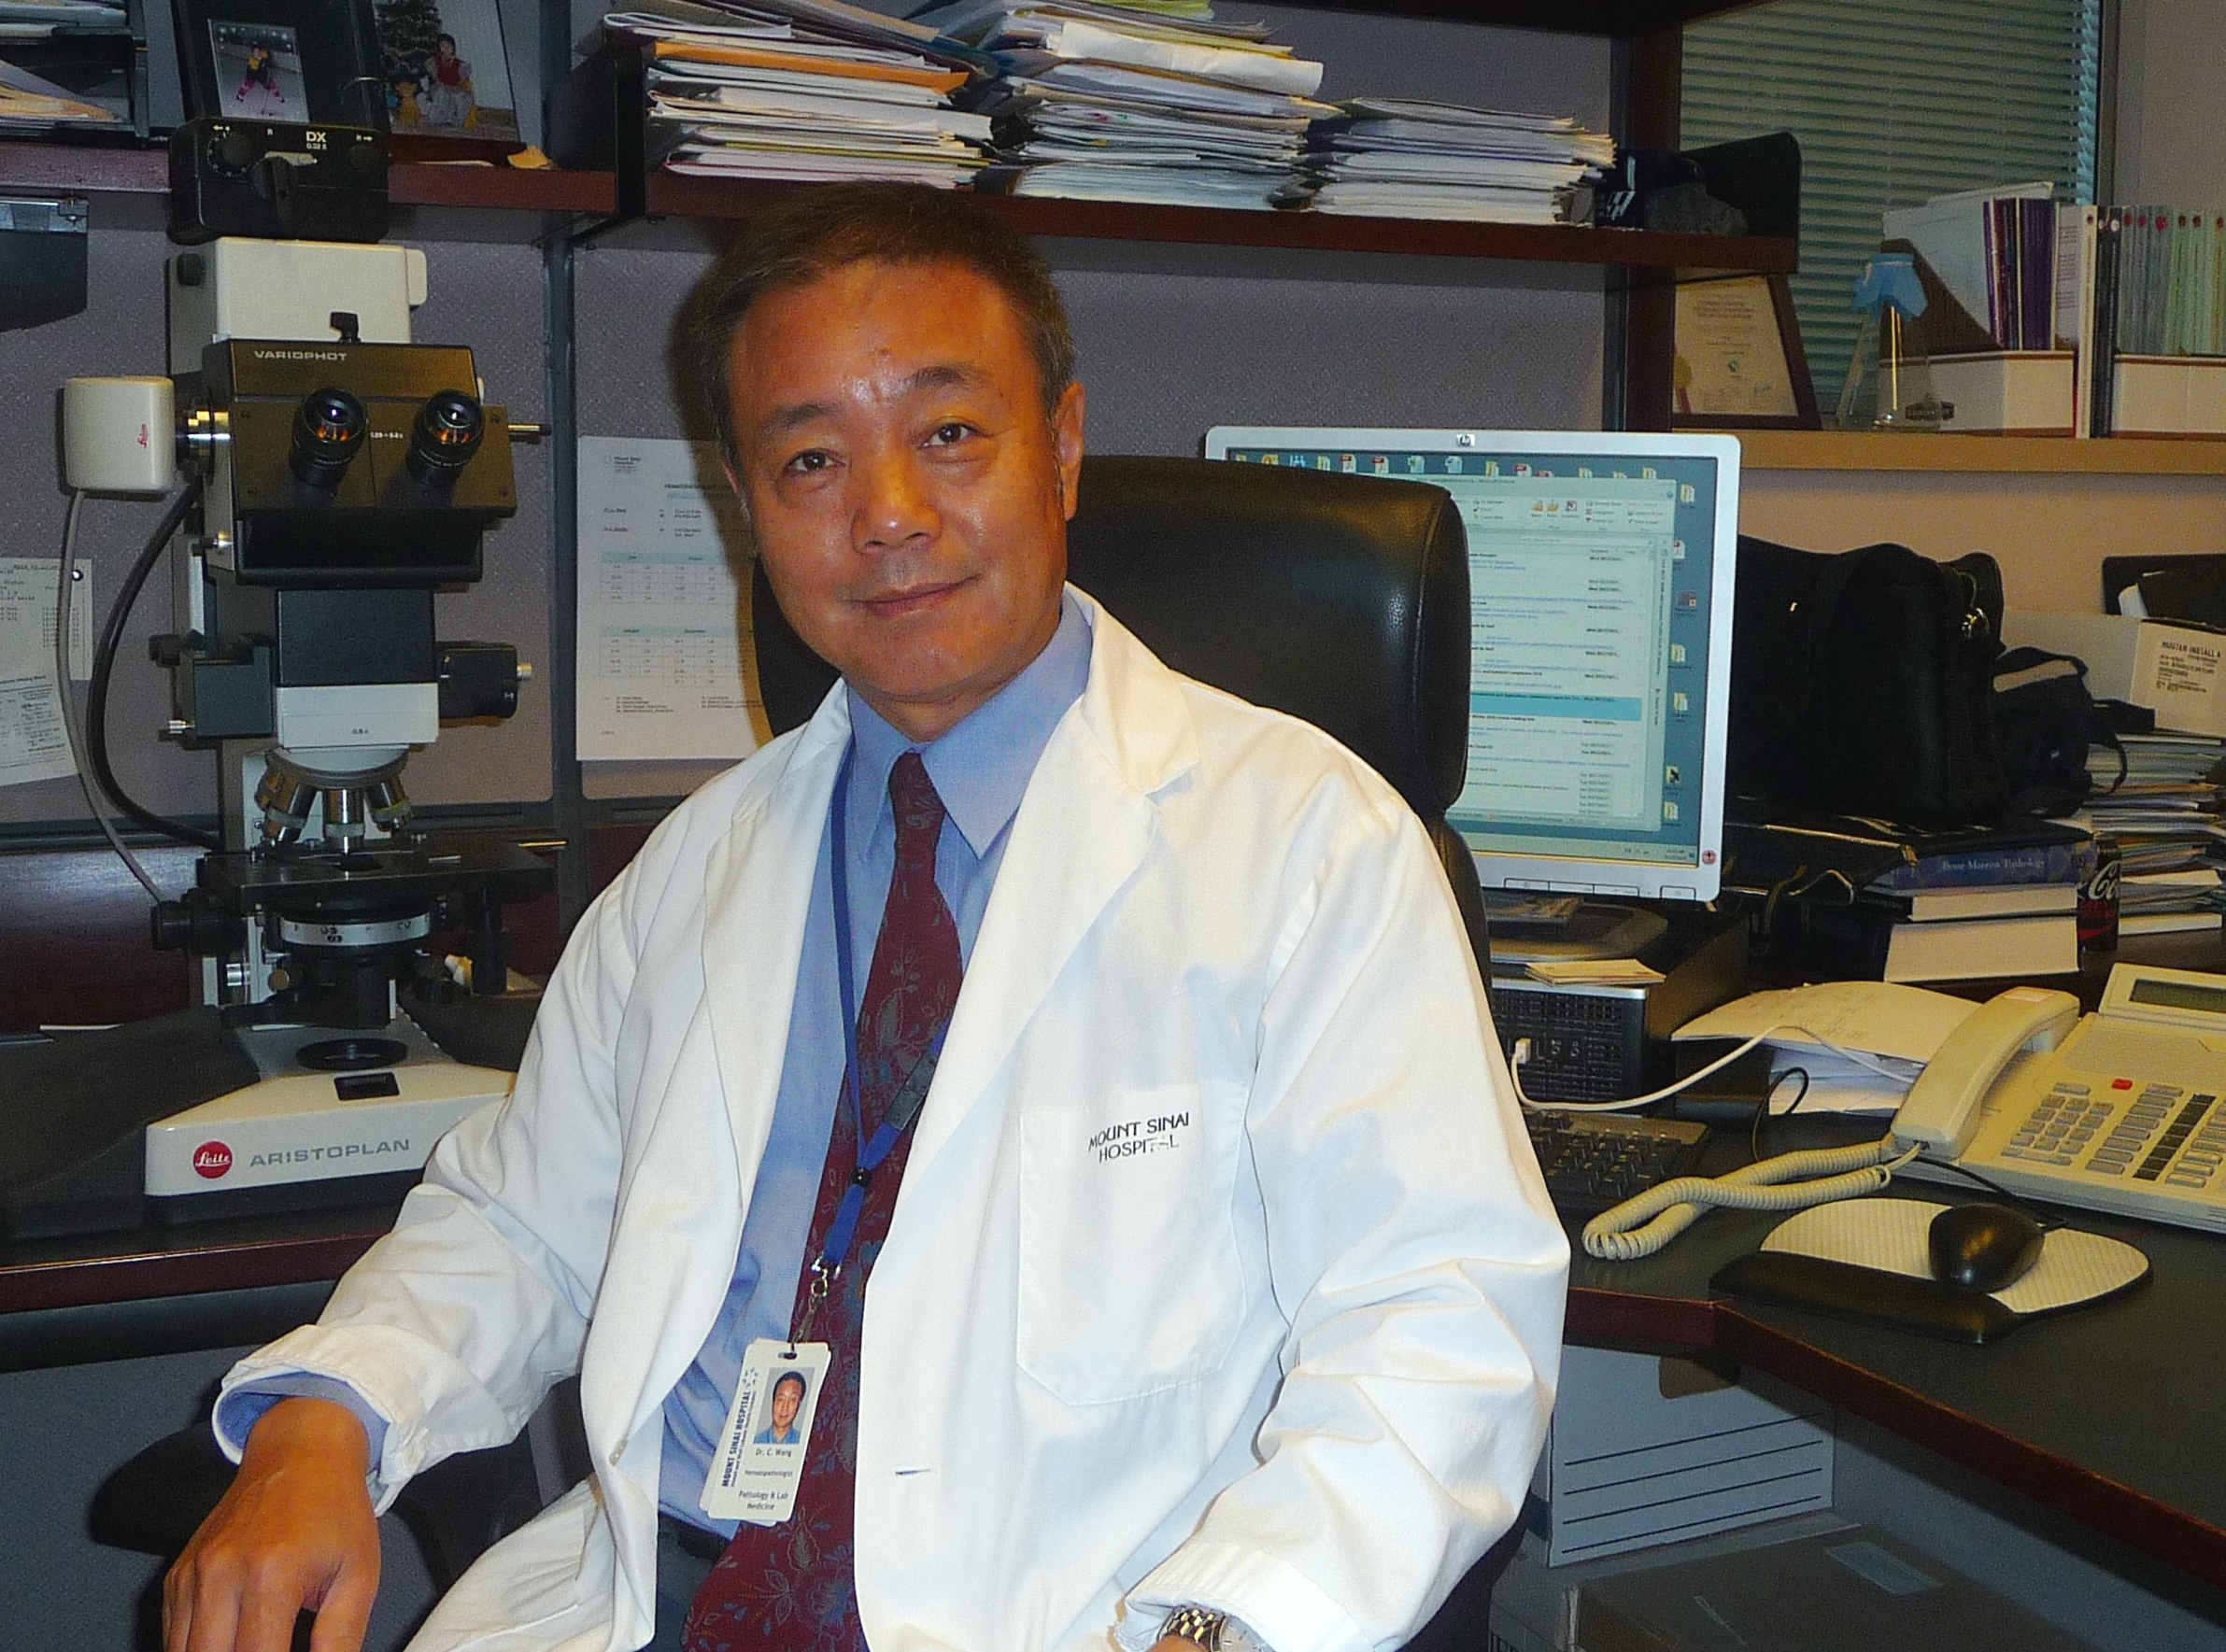 Professor Chen Wang